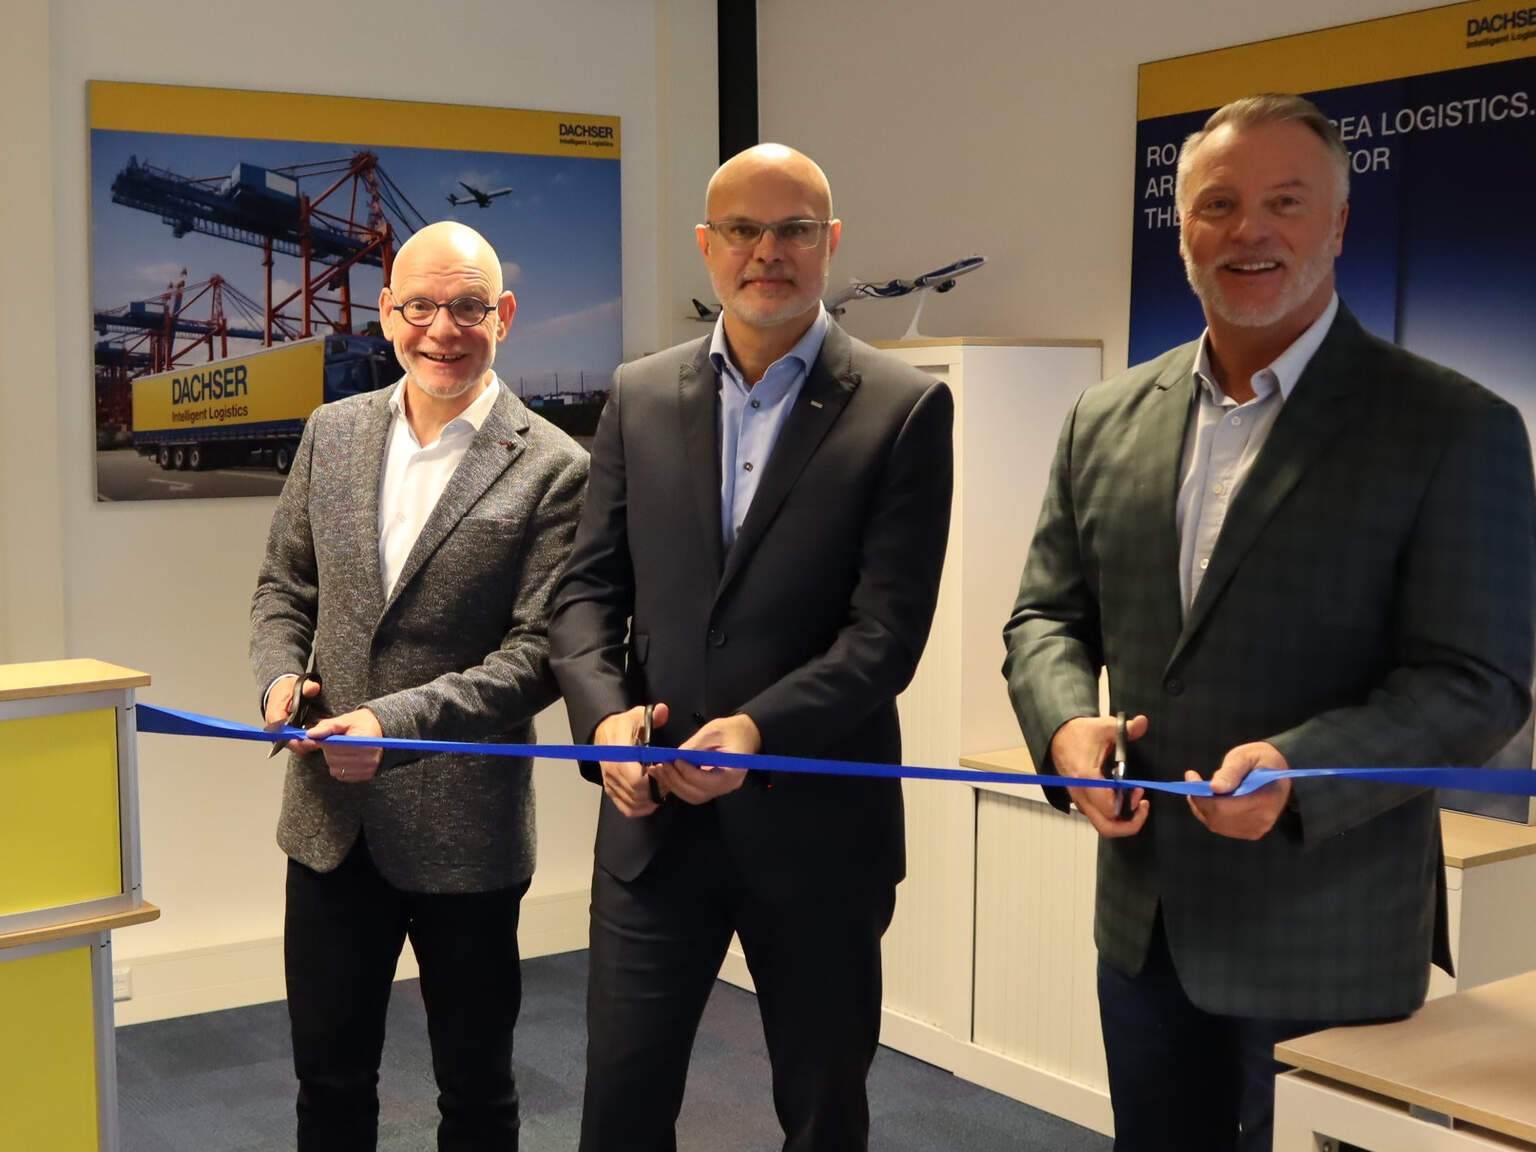 V.l.n.r: Wilco Versteegh, Managing Director DACHSER Air and Sea Logistics Netherlands & Belgium; Raymond Boumans, Branch Manager DACHSER Air & Sea Logistics Maastricht; Aat van der Meer, Managing Director DACHSER Benelux.